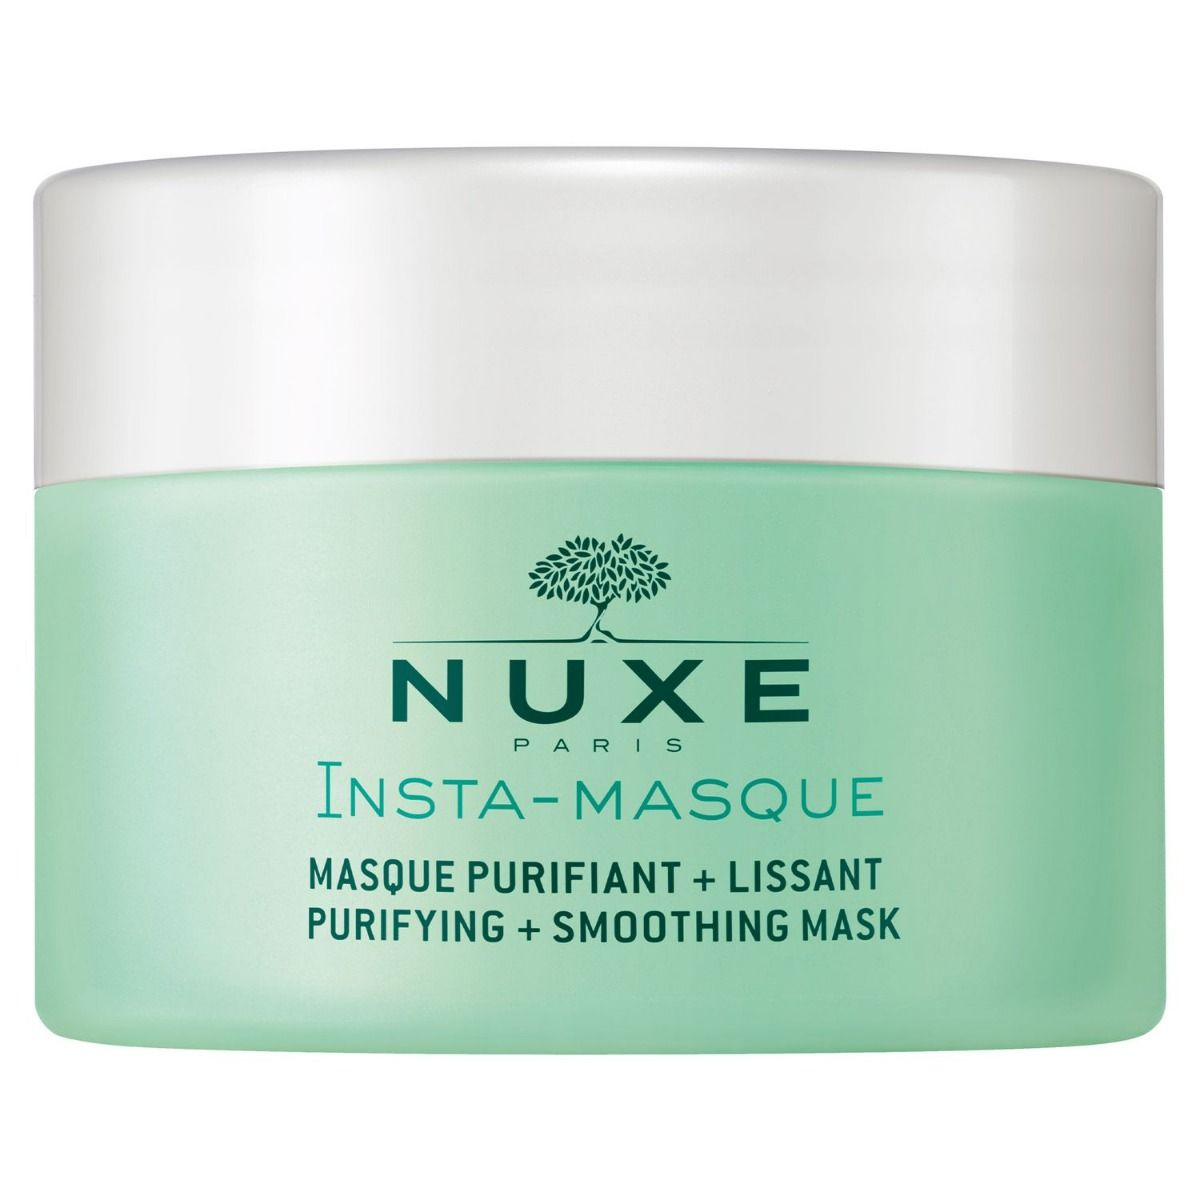 Nuxe Insta-Masque Purifiant + Lissant медицинская маска, 50 ml nuxe очищающая разглаживающая маска для лица masque purifiant lissant insta masque 50 мл nuxe insta masque